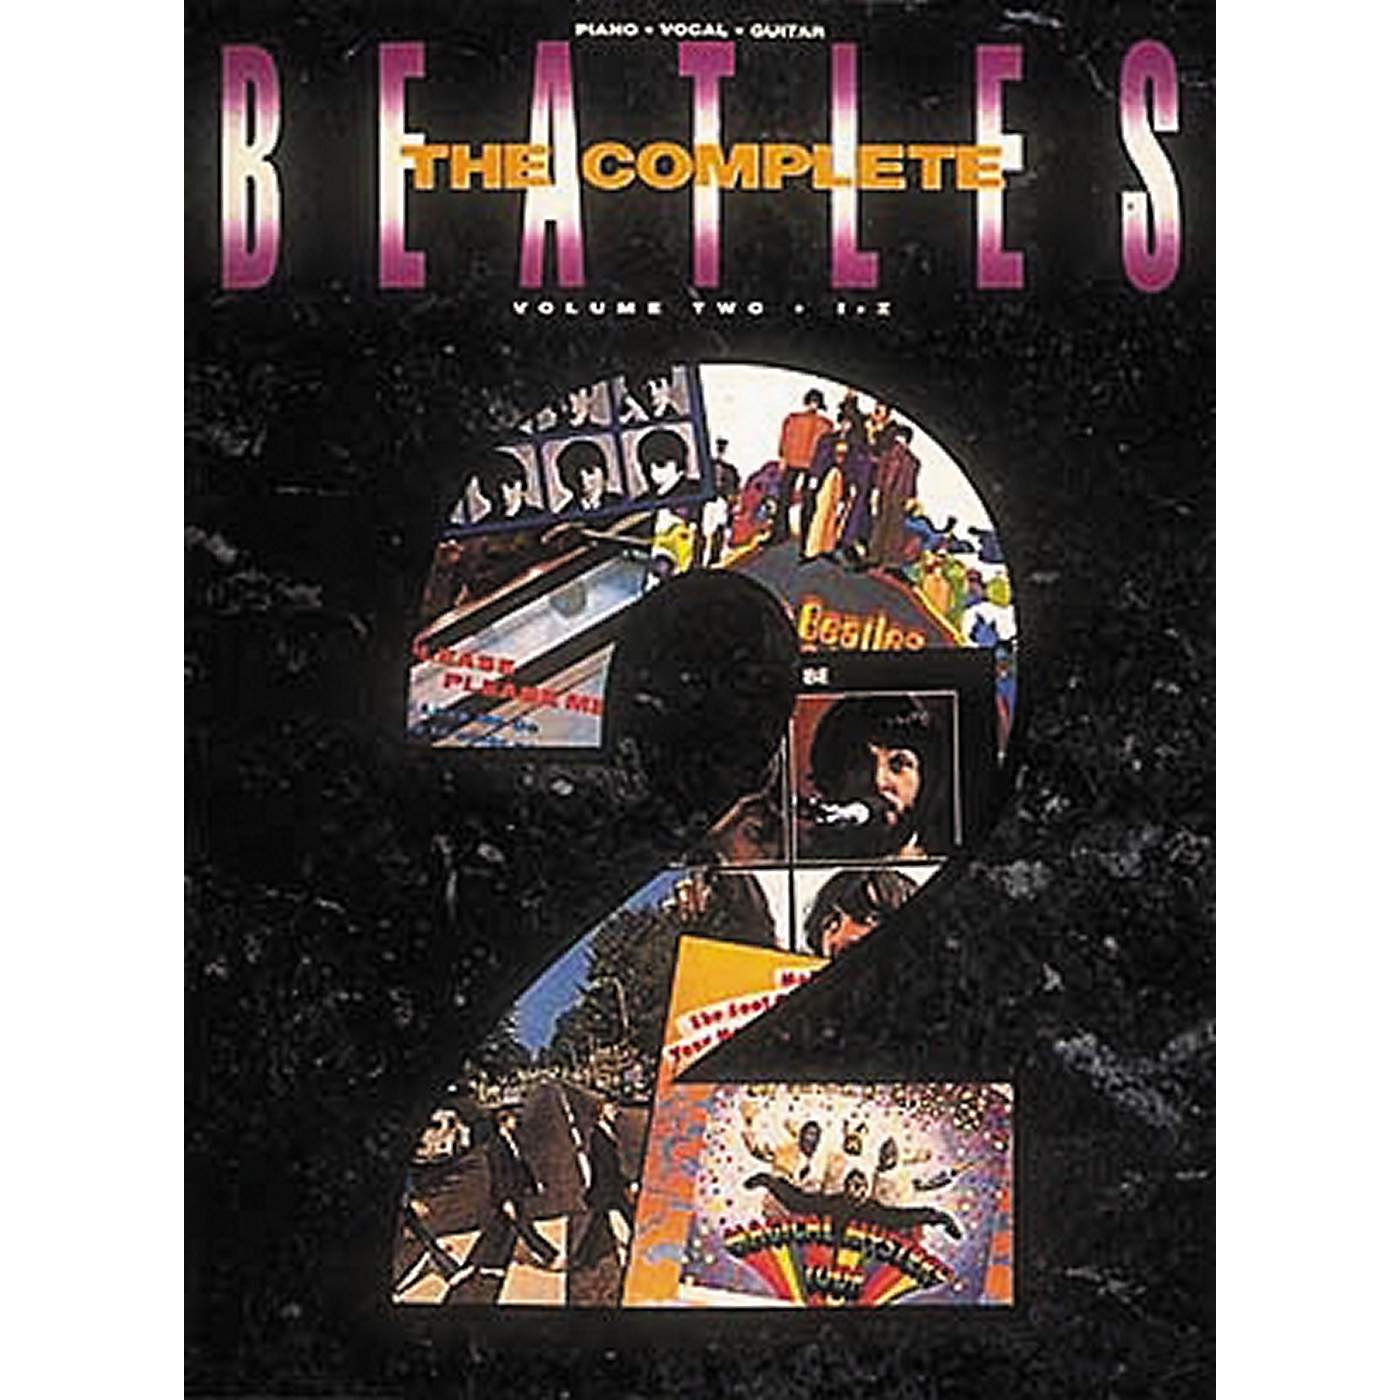 Hal Leonard Complete Beatles Volume 2 Piano, Vocal, Guitar Songbook thumbnail